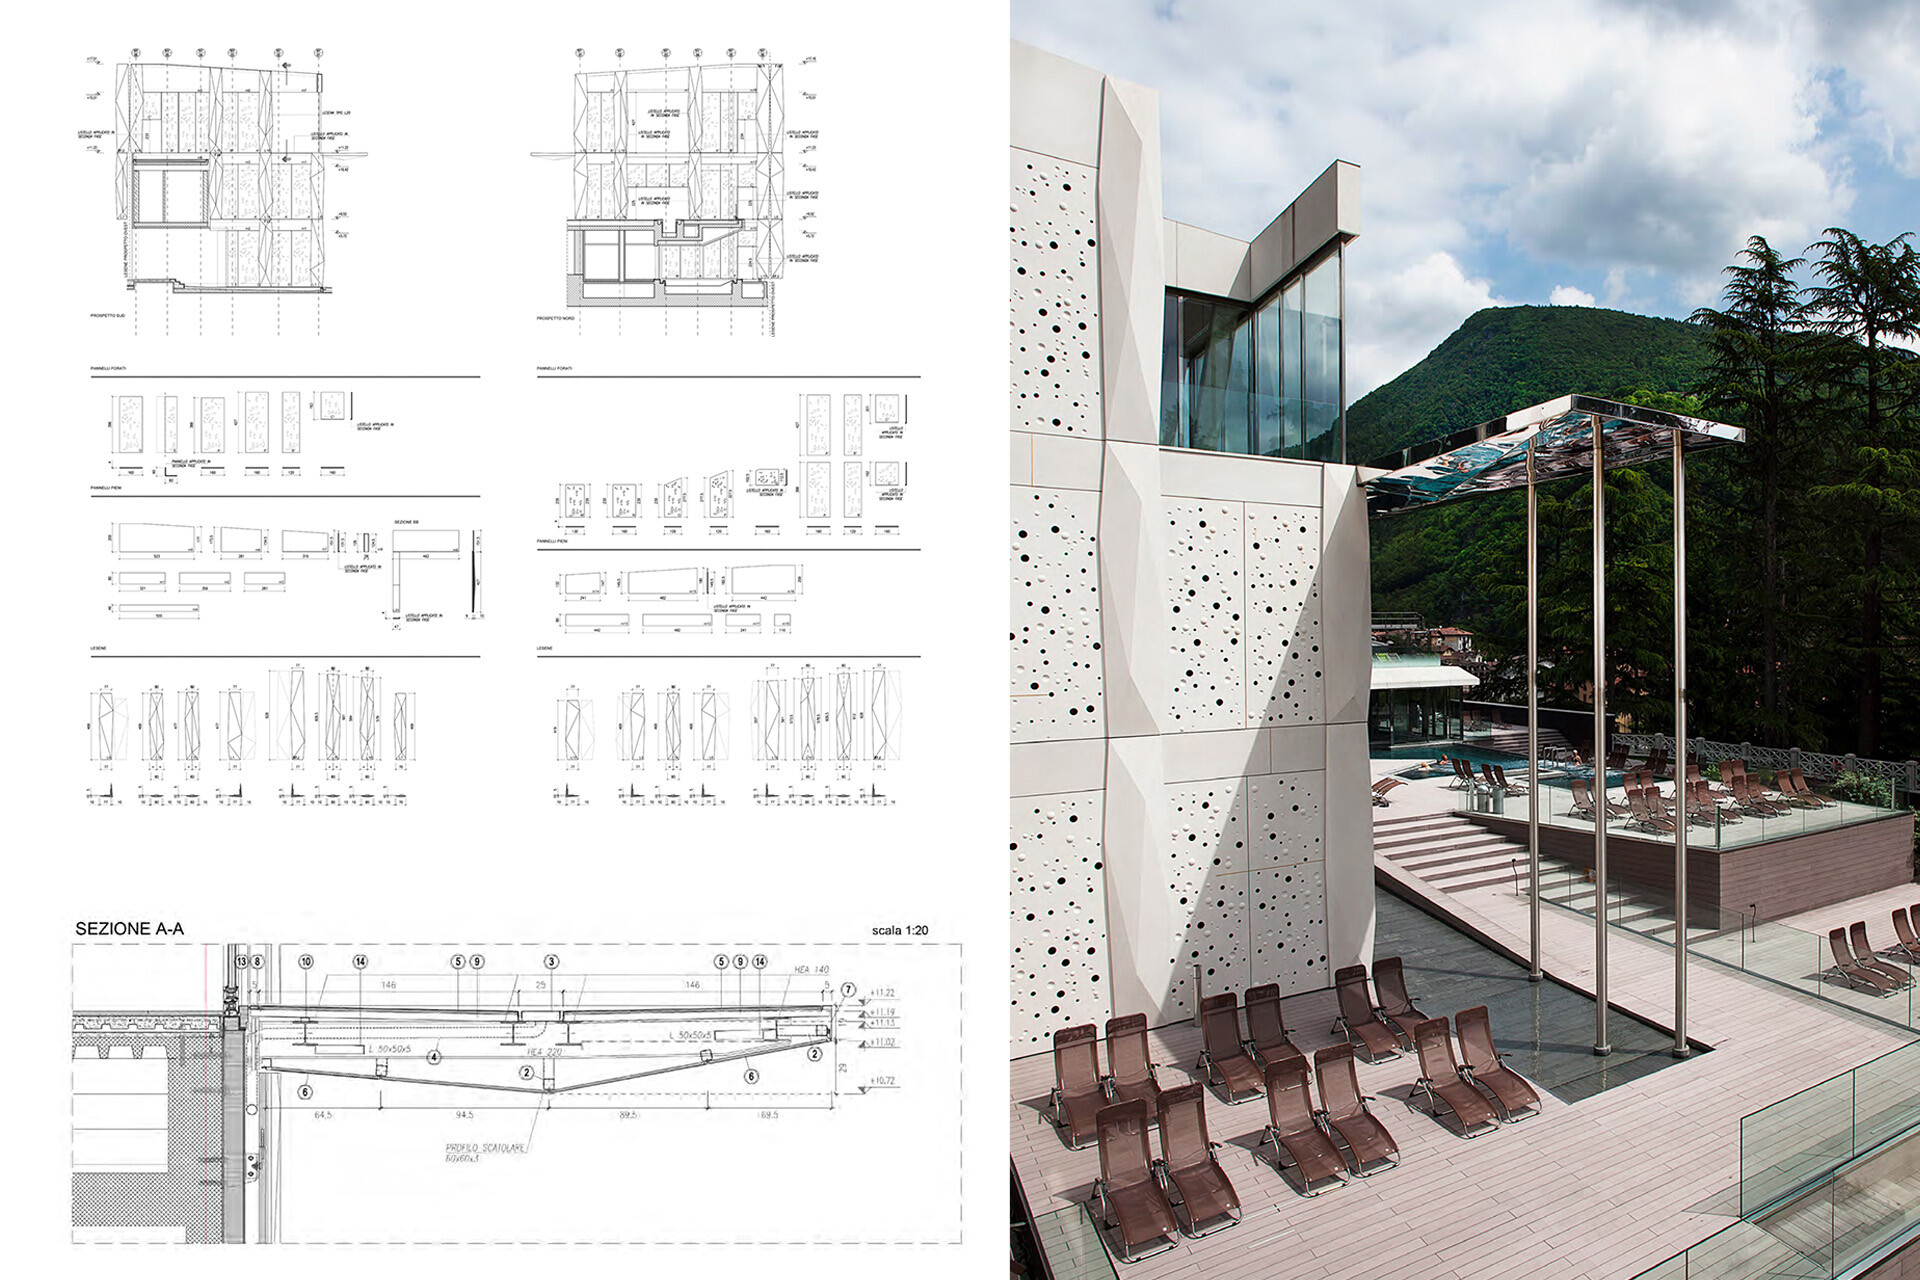 Facade design engineering by SCE Project San pellegrino Dettagli